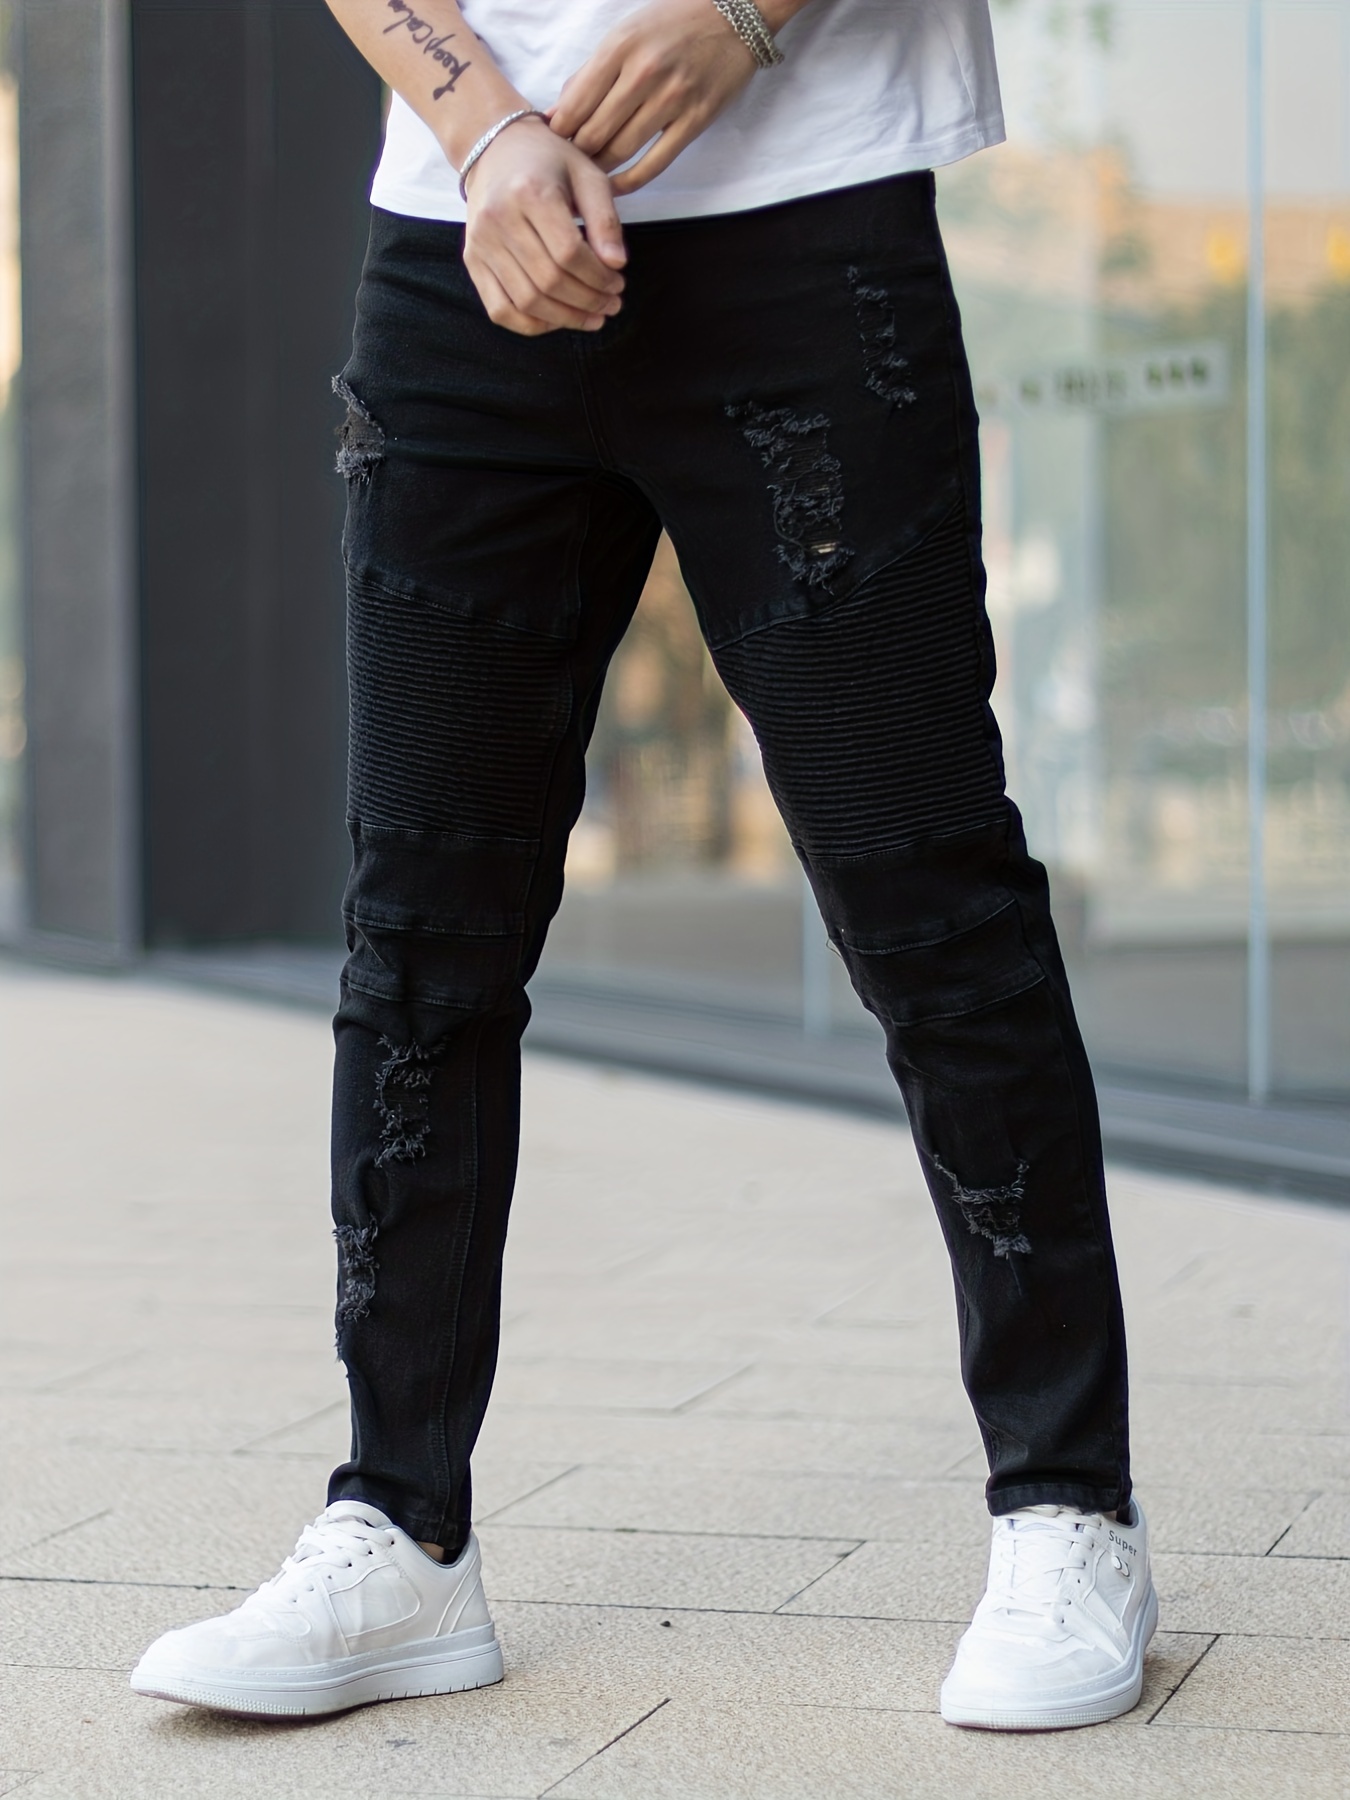 Las mejores ofertas en Pantalones negros de mezclilla para hombres